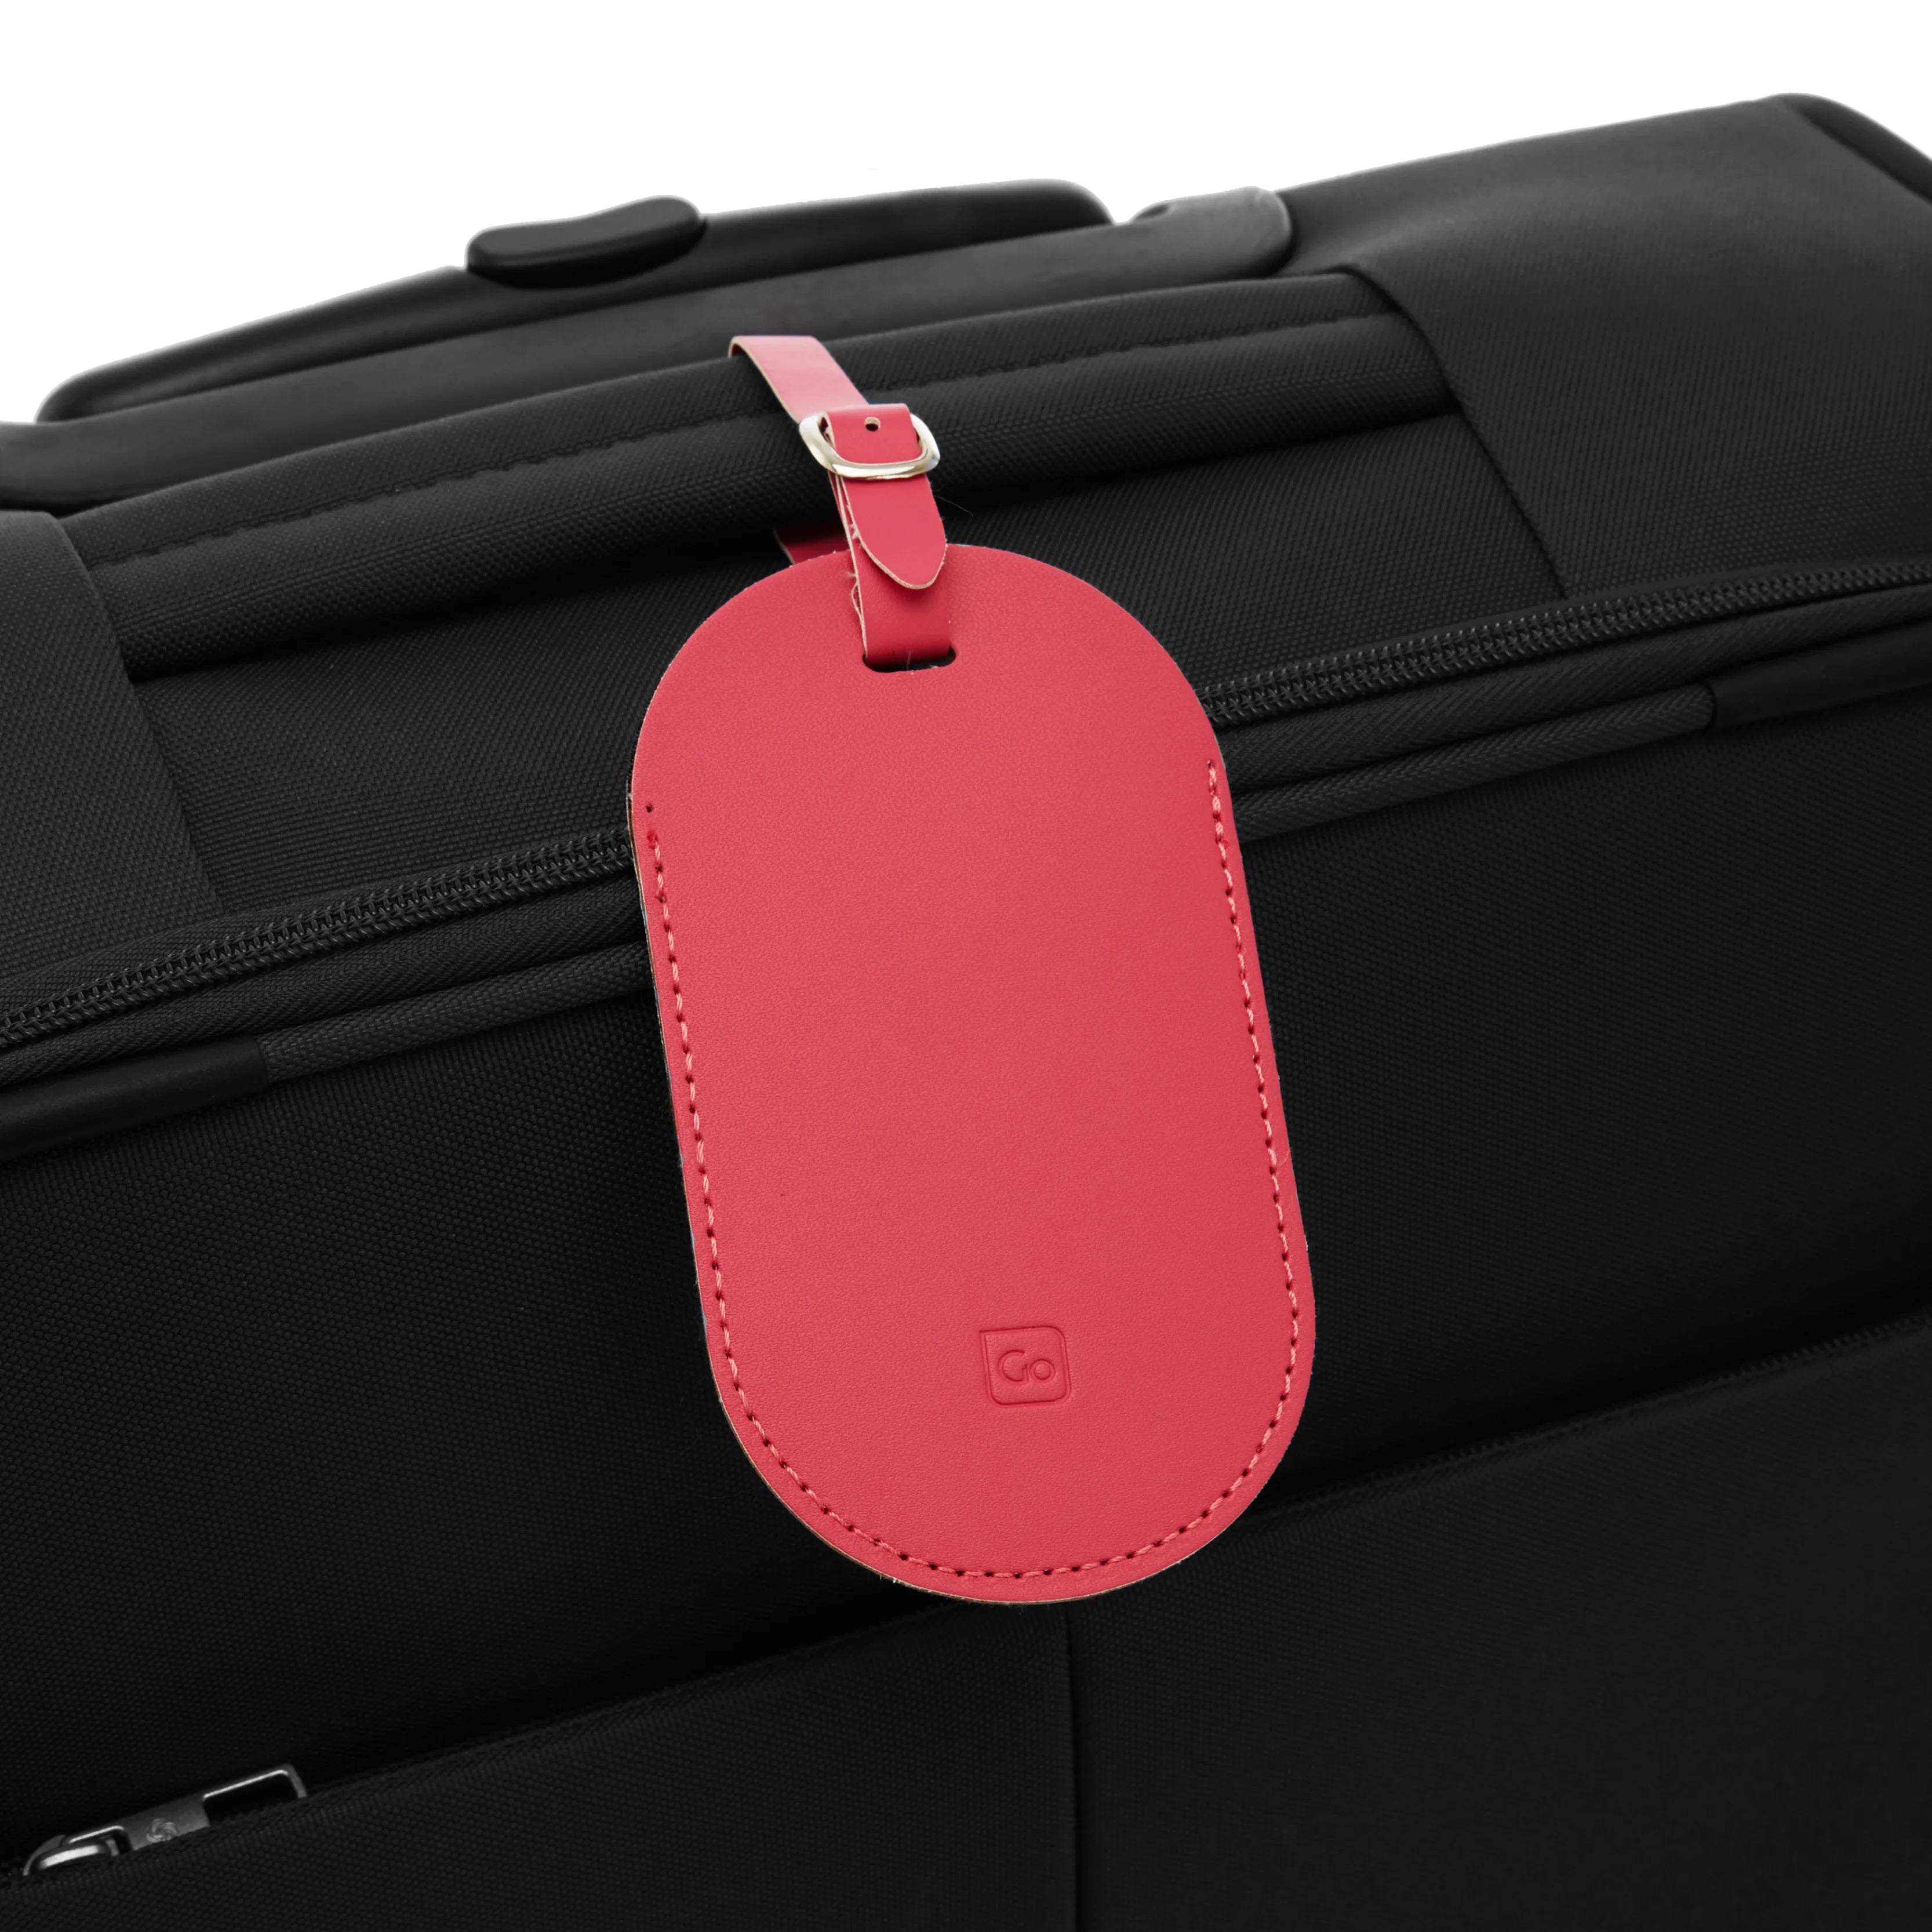 Design Go travel accessories luggage tag - purple